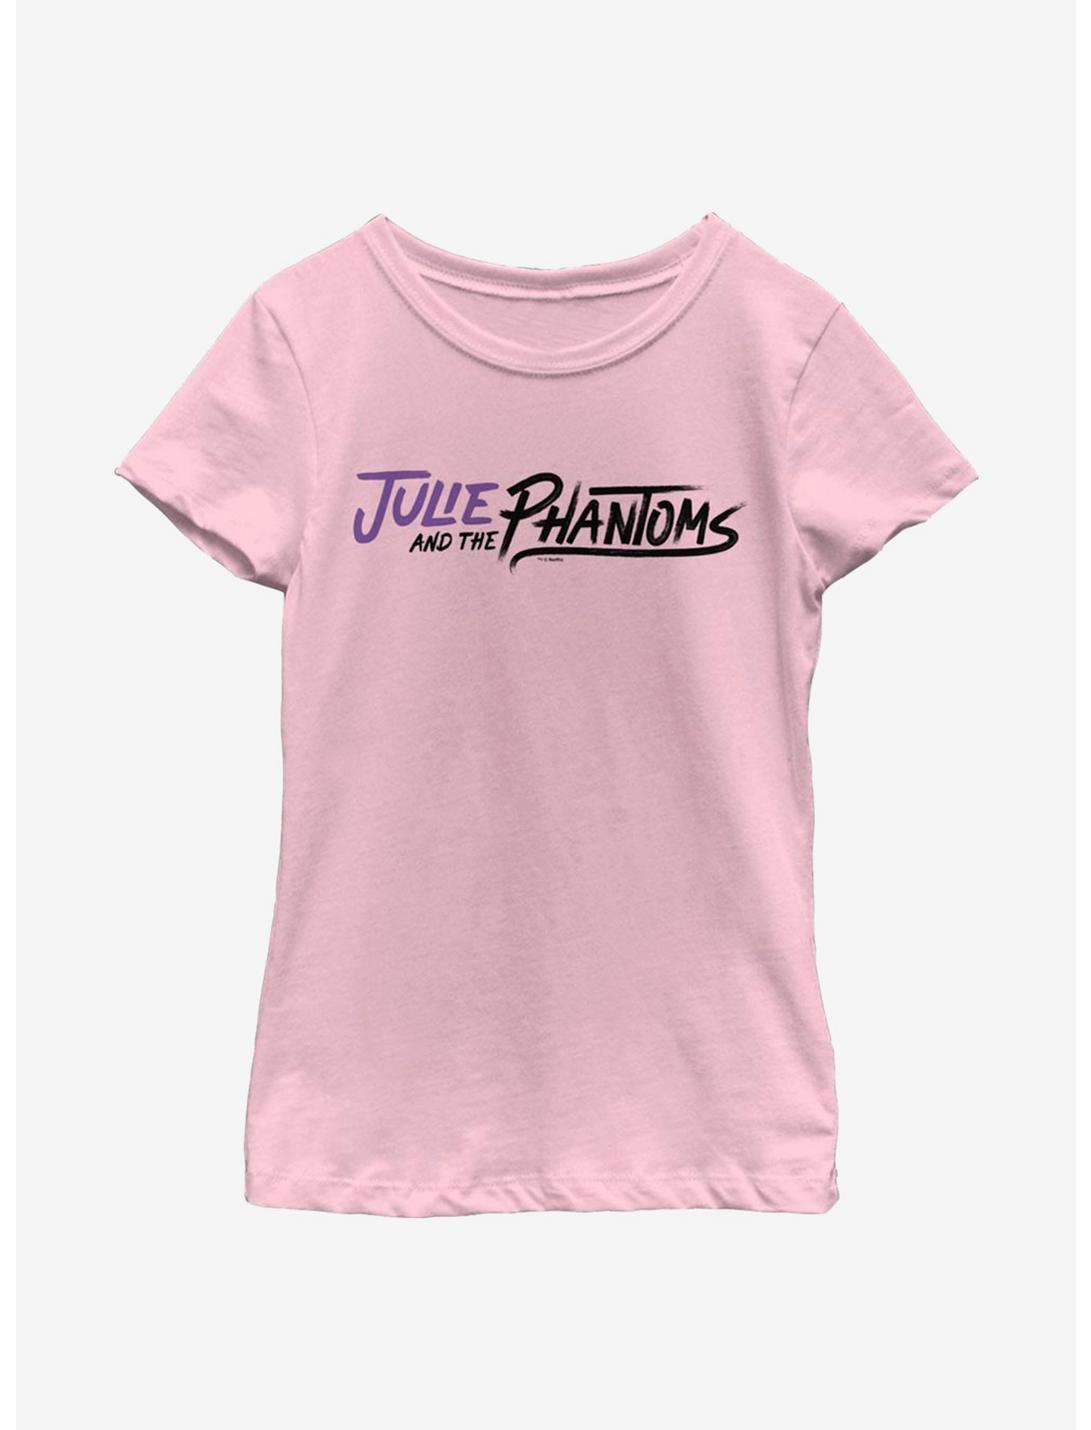 Julie And The Phantoms Horizontal Logo Youth Girls T-Shirt, PINK, hi-res